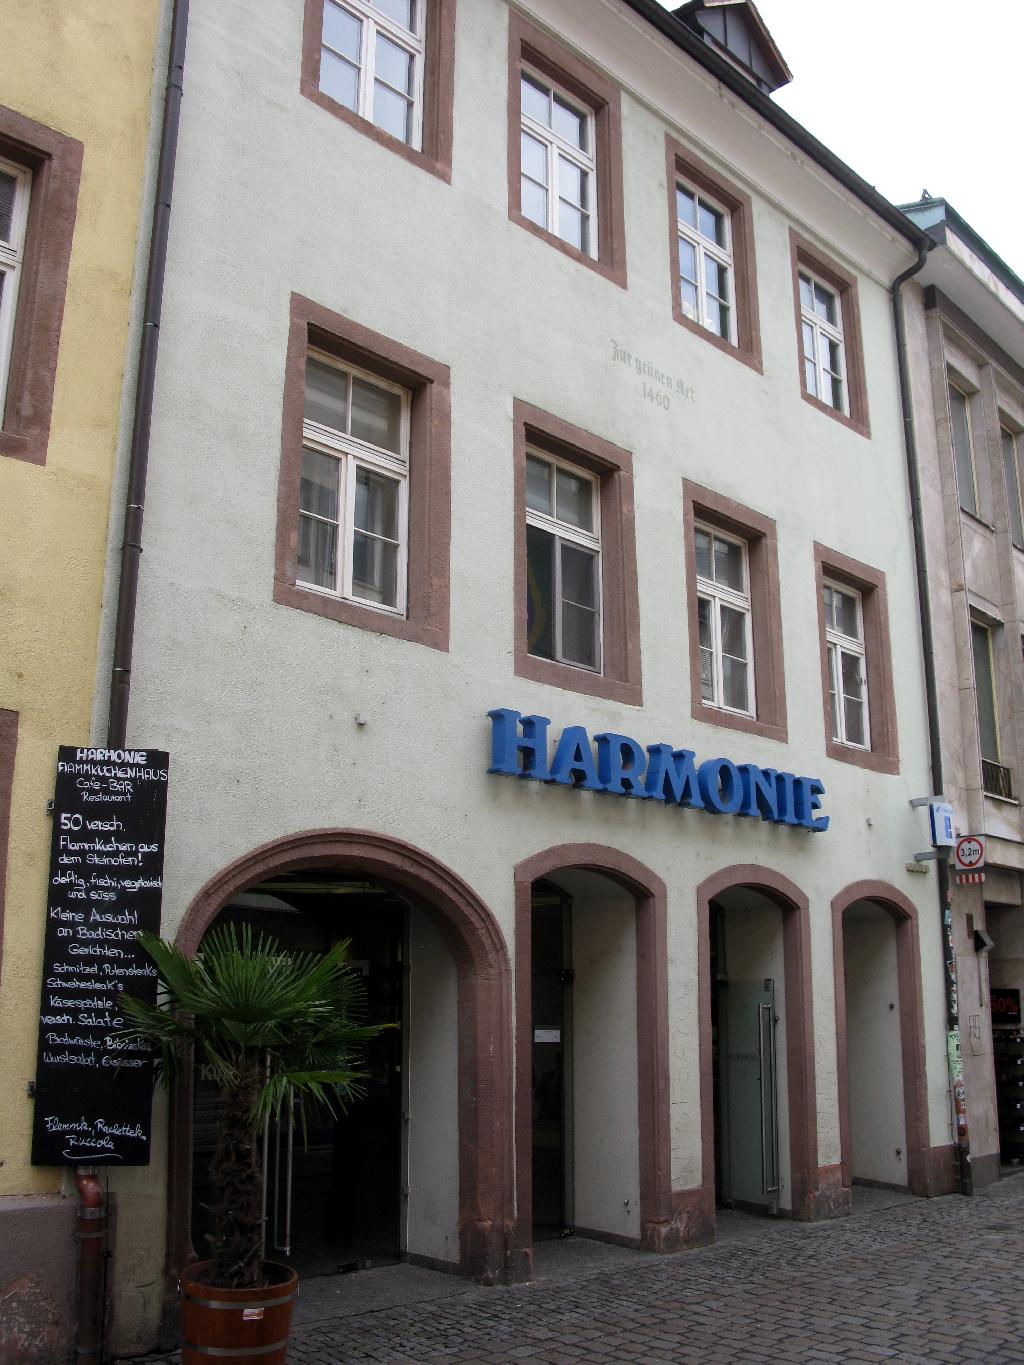 Harmonie in Freiburg im Breisgau